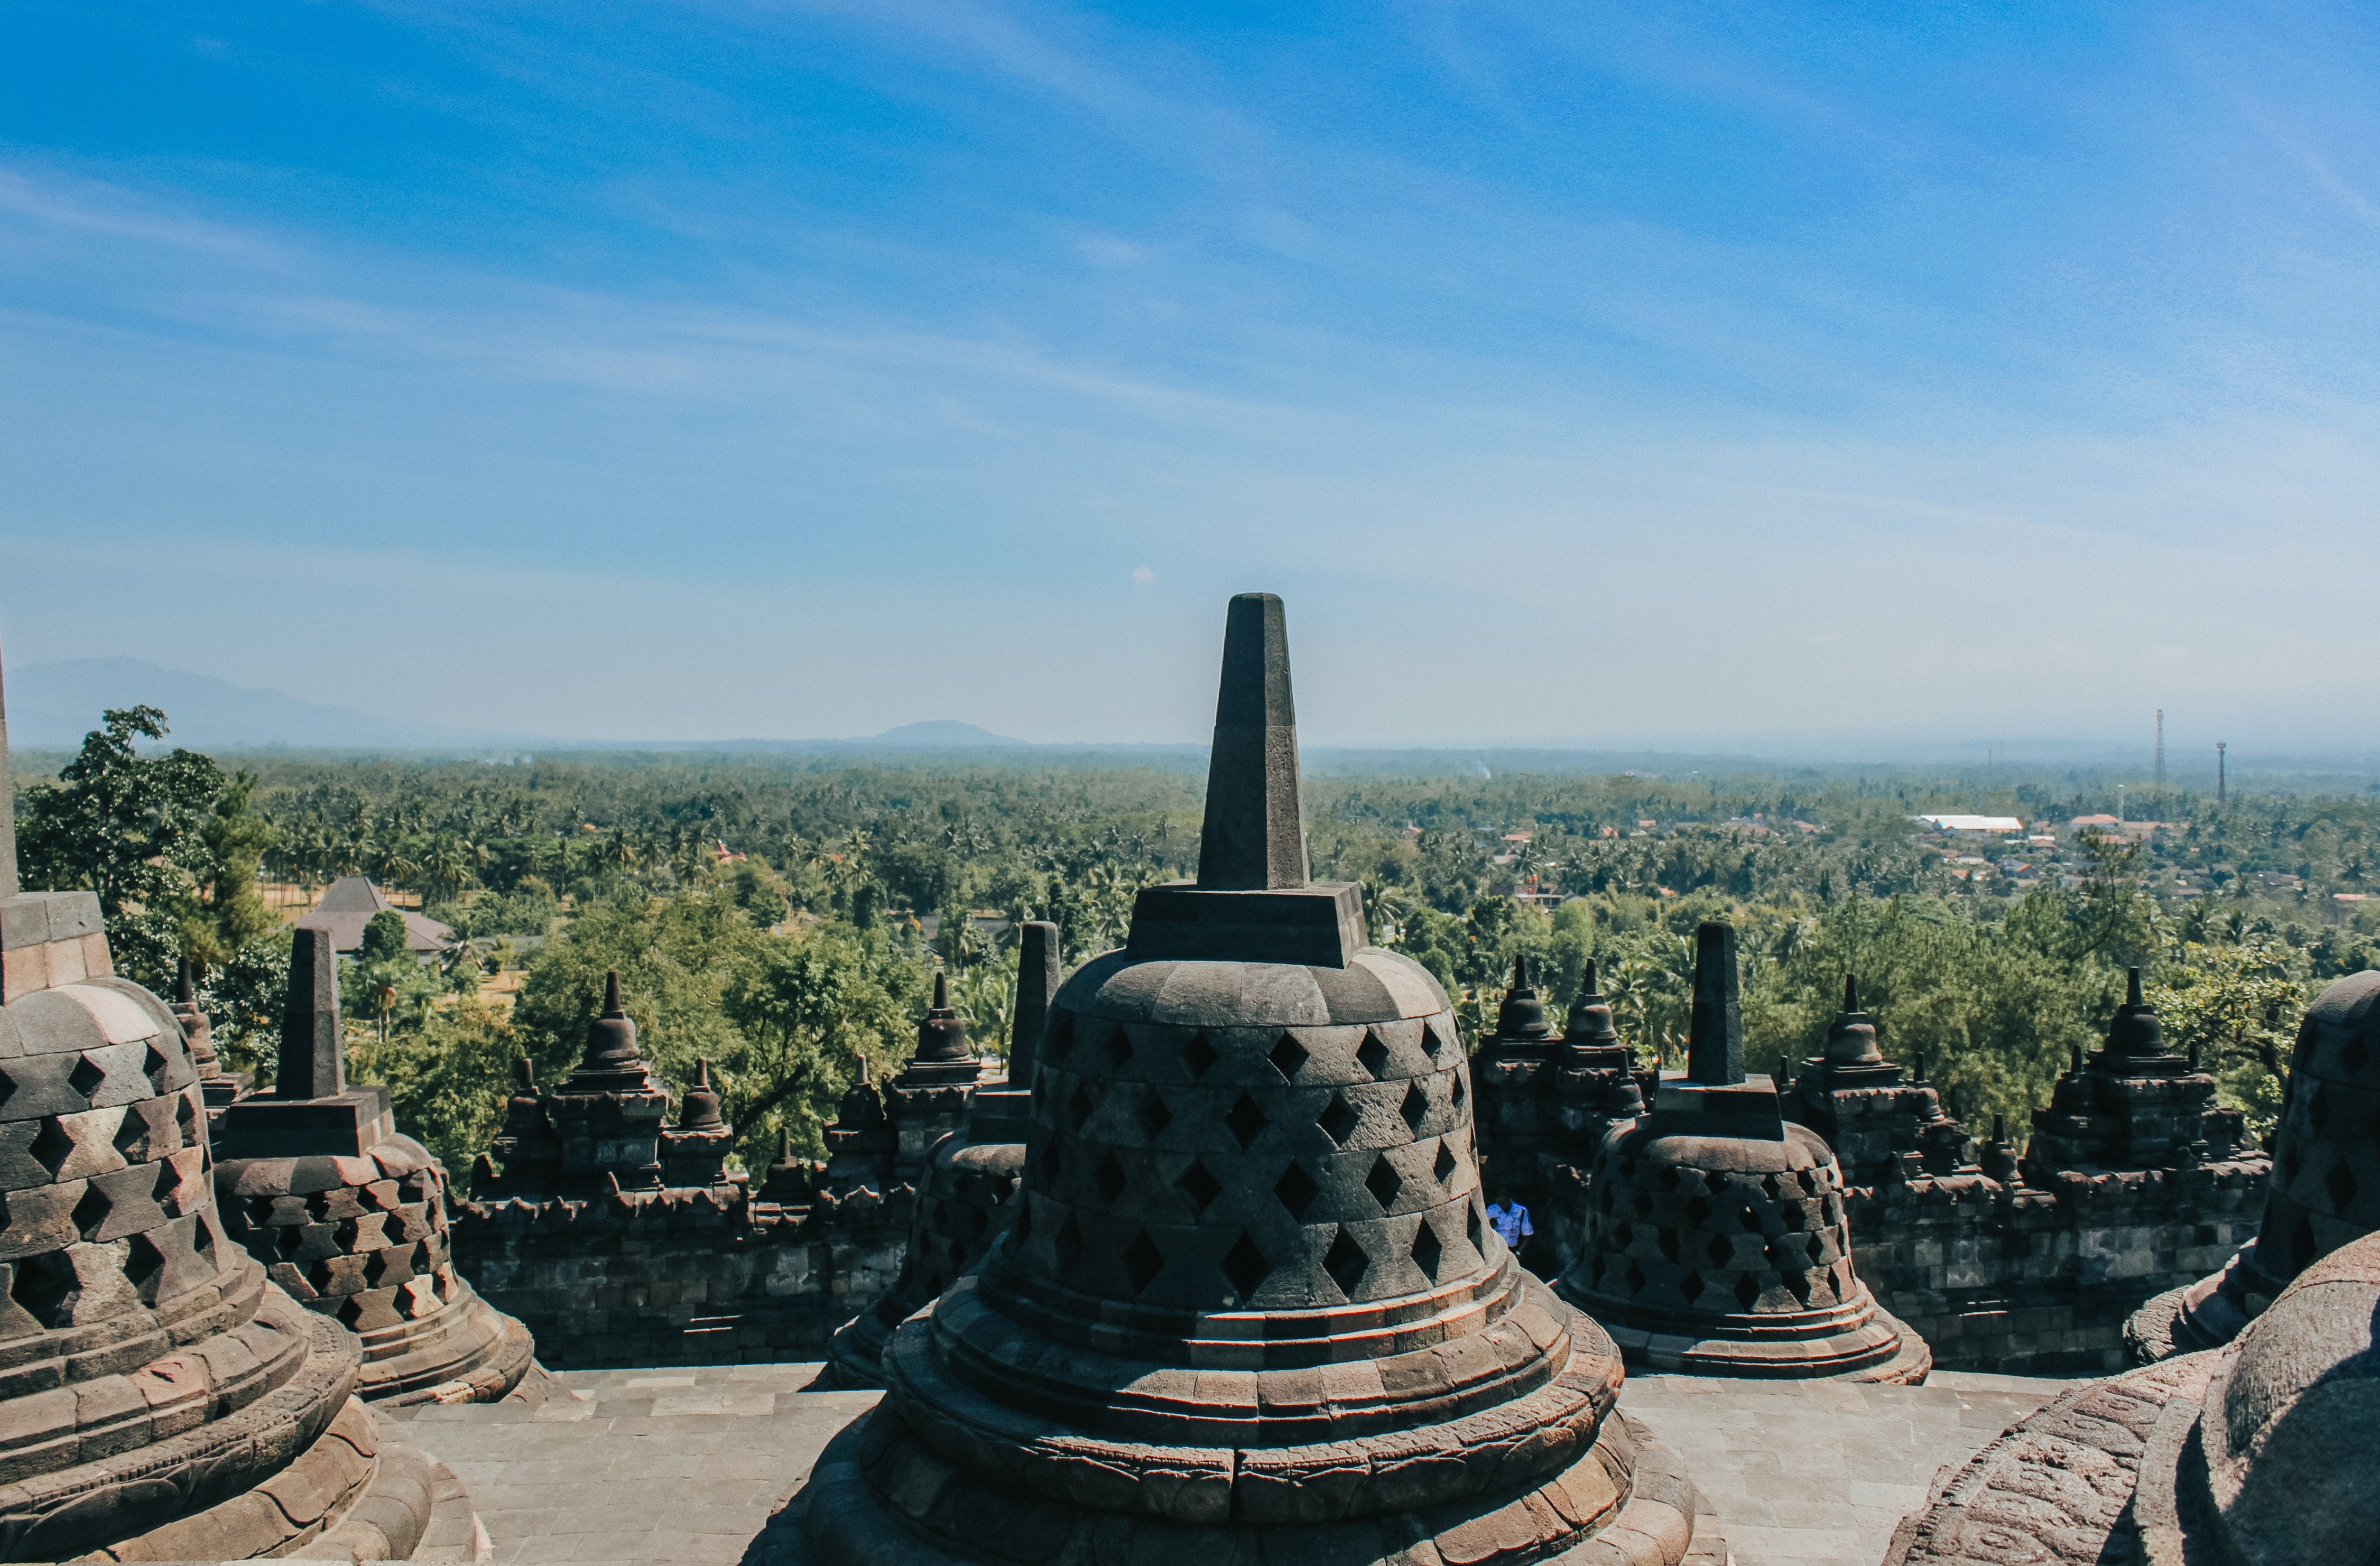  Candi Borobudur merupakan salah satu destinasi wisata di Magelang (Dok. Eugenia Clara/Unsplash)